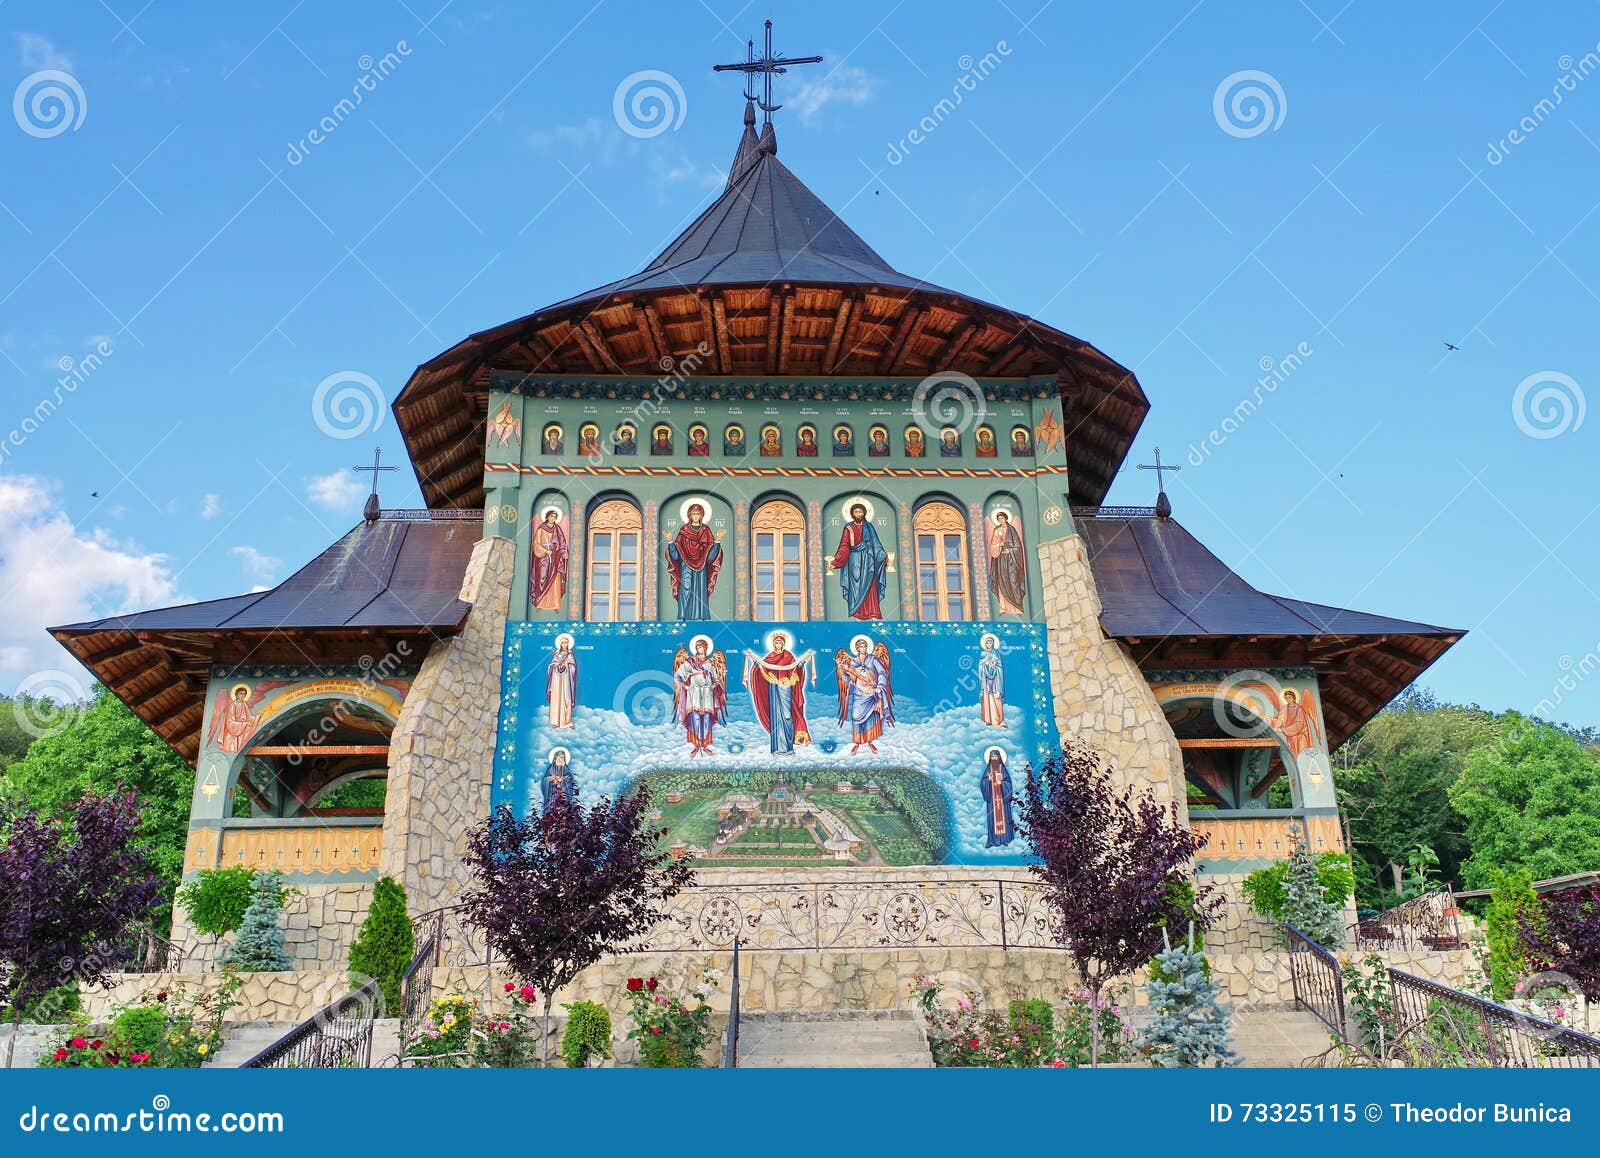 orthodox church - monastery bujoreni - landmark attraction in vaslui county, romania